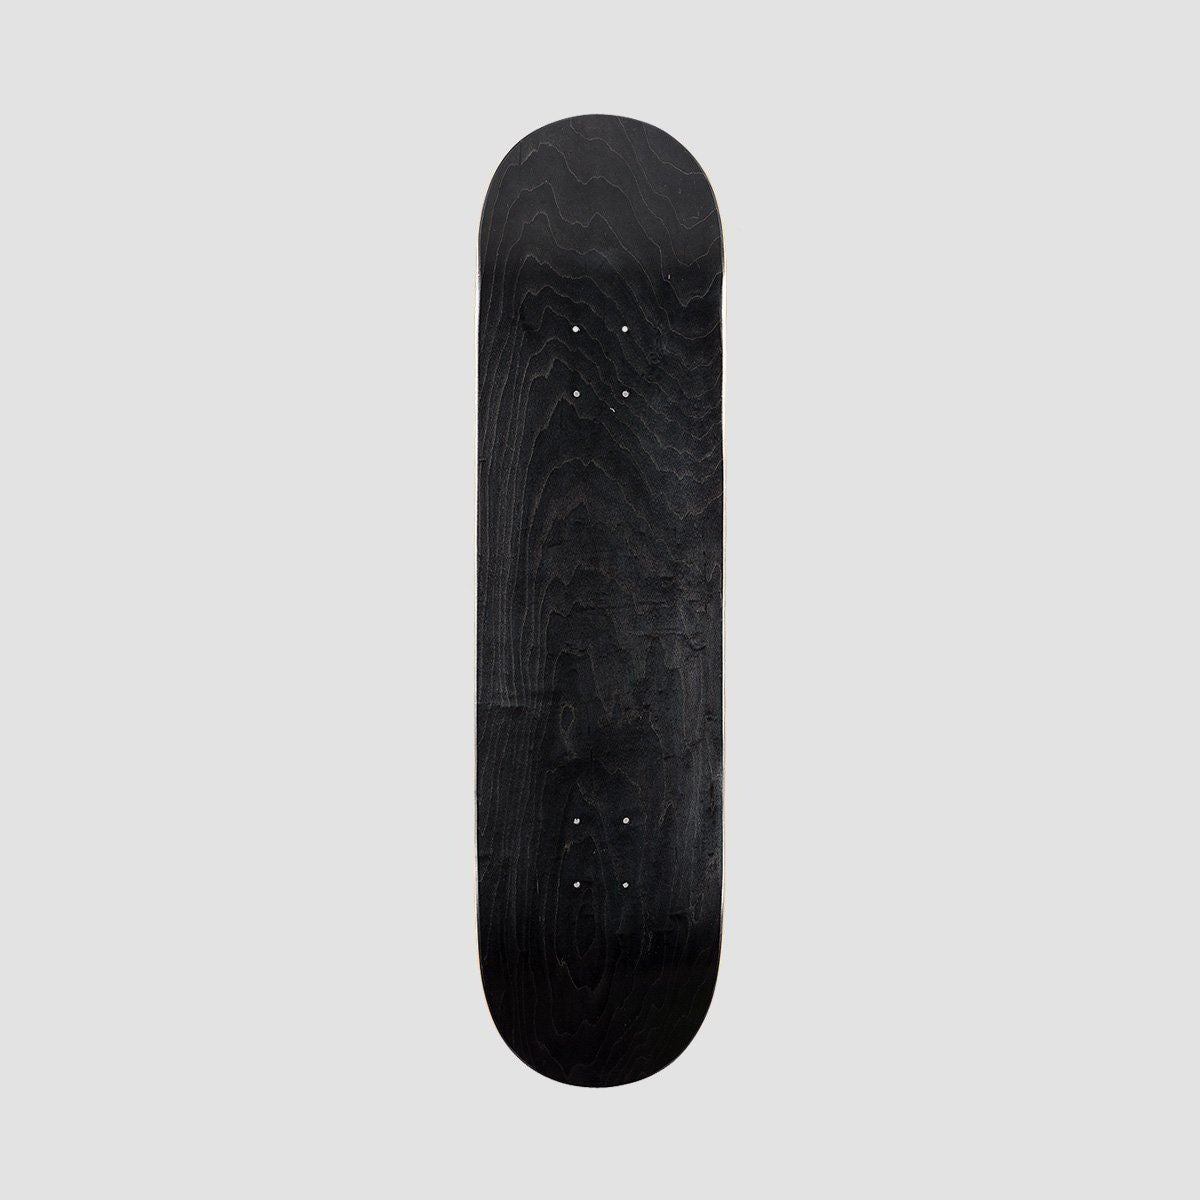 Enuff Classic Skateboard Deck Black - 8.25"